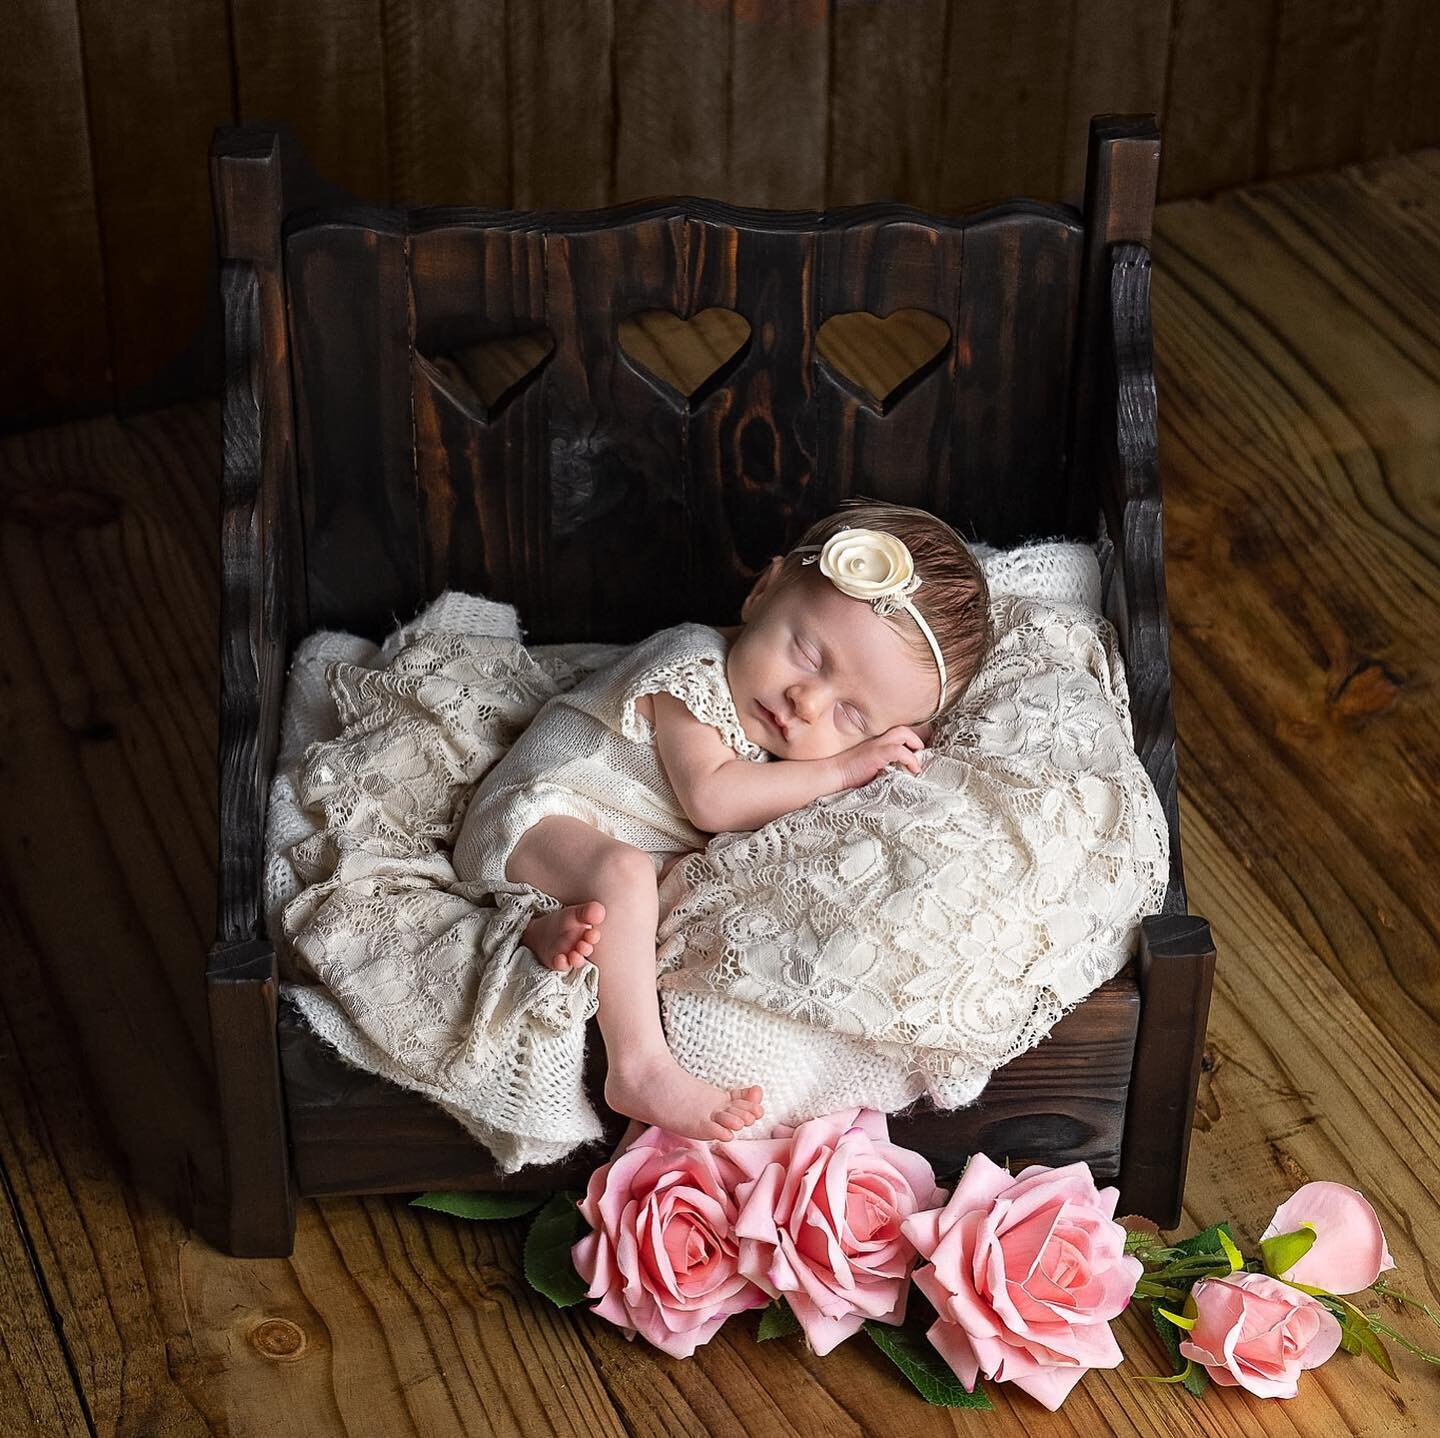 Tiny little darling Daniella 

➳
➳
➳
➳
#newbornphotography #newbornphotographer #newbornphotoshoot&nbsp;#newborn #baby&nbsp;#newbornpictures&nbsp;#newbornphotos #babyphotography abigailsmithphotography #empangeniphotographer #richardsbayphotographer 